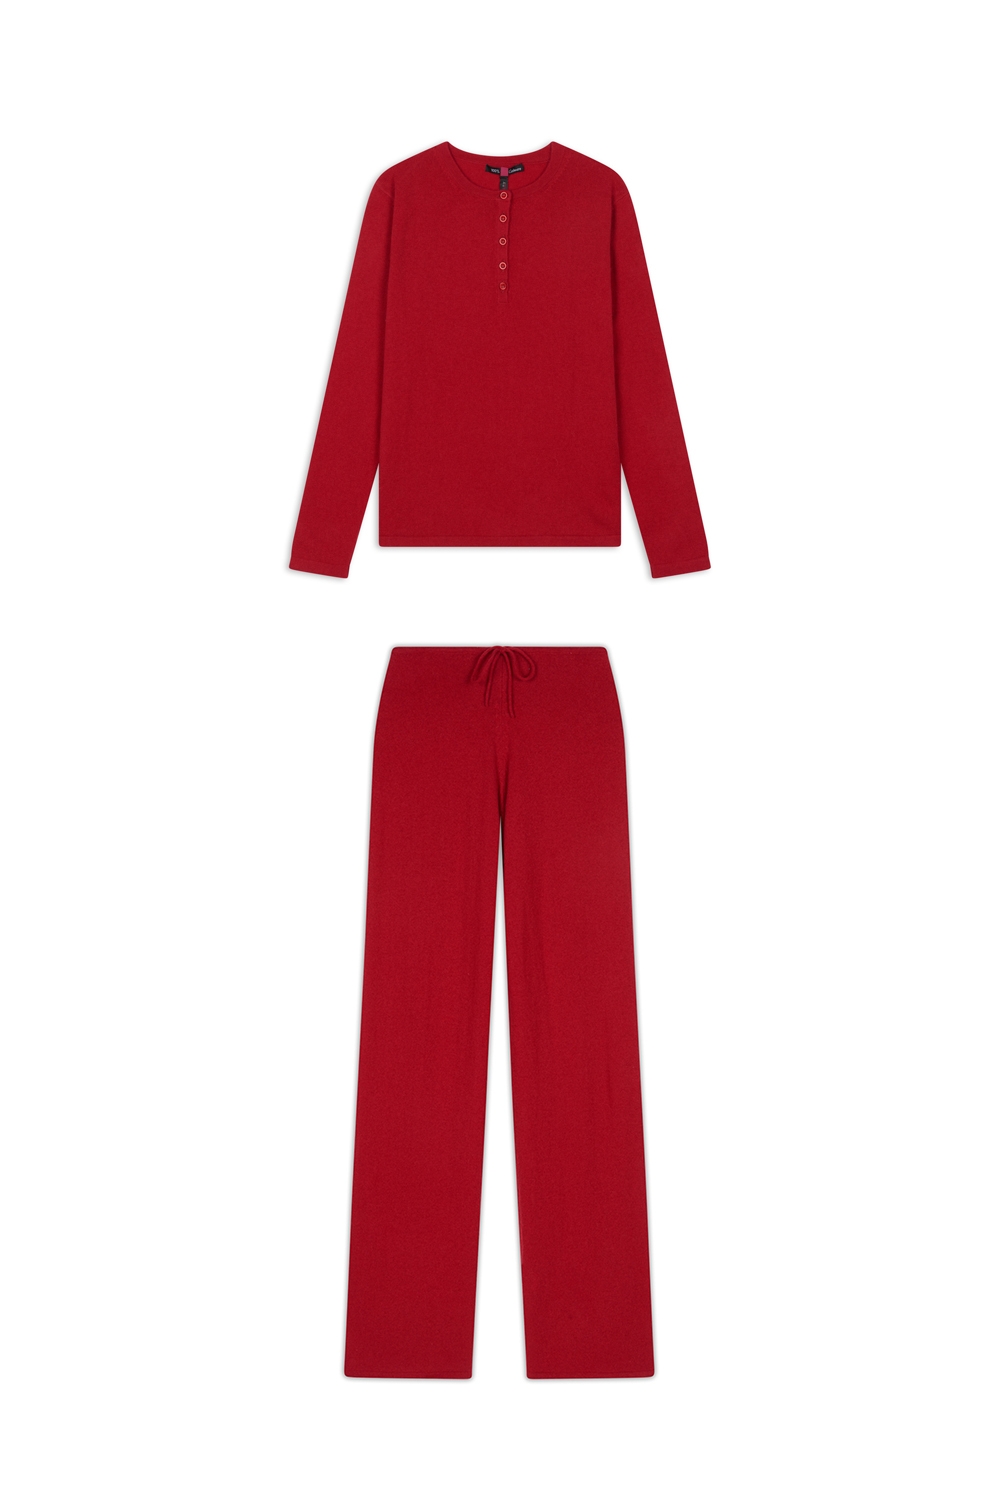 Cachemire pyjama femme loan rouge velours l